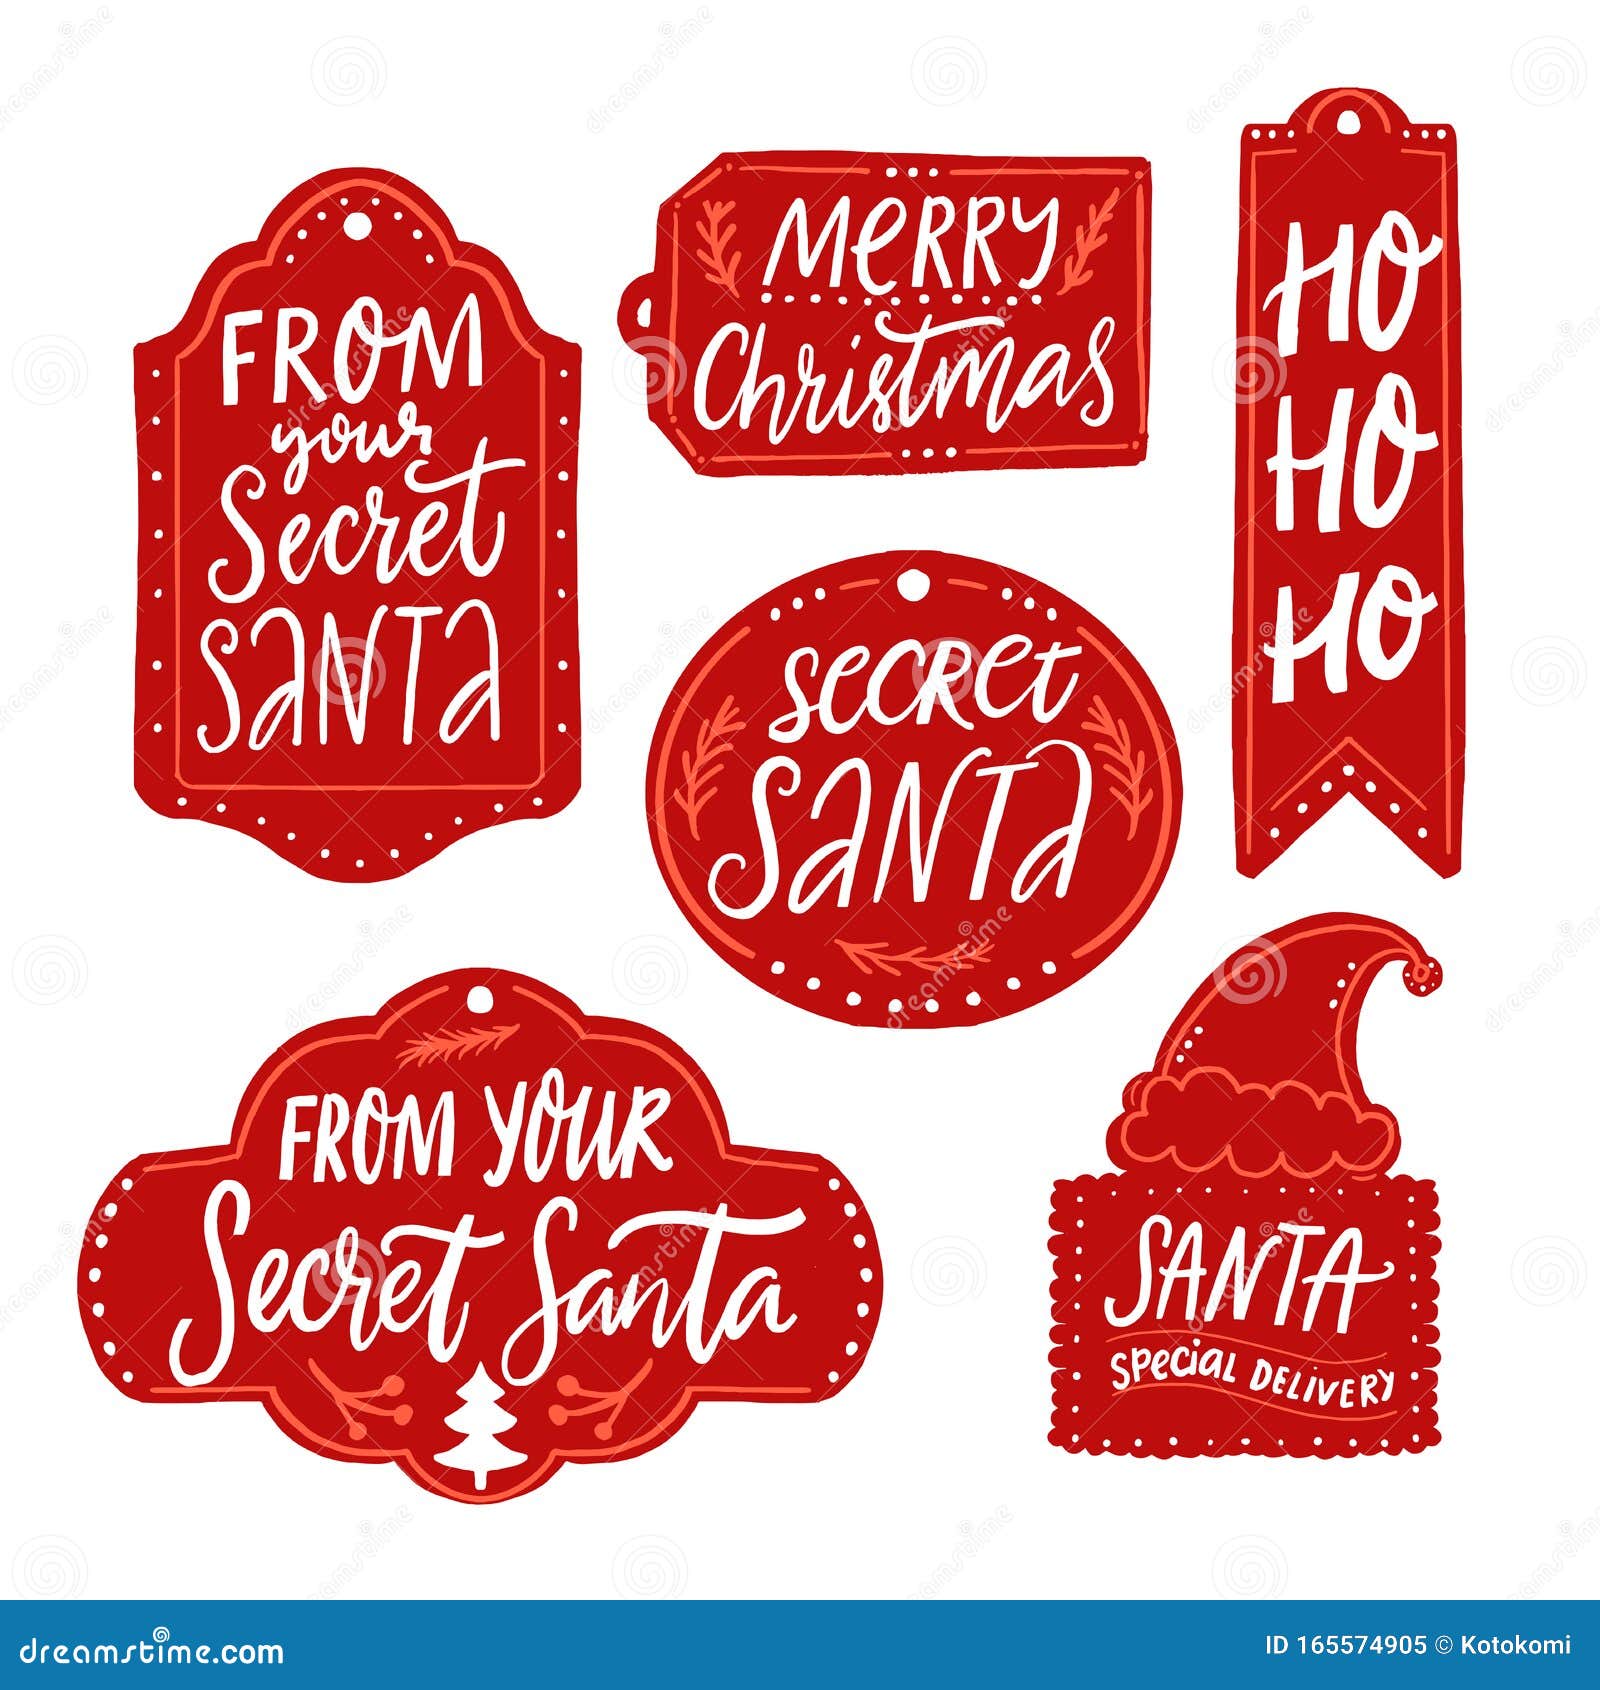 secret-santa-gift-exchange-printable-pdf-christmas-party-etsy